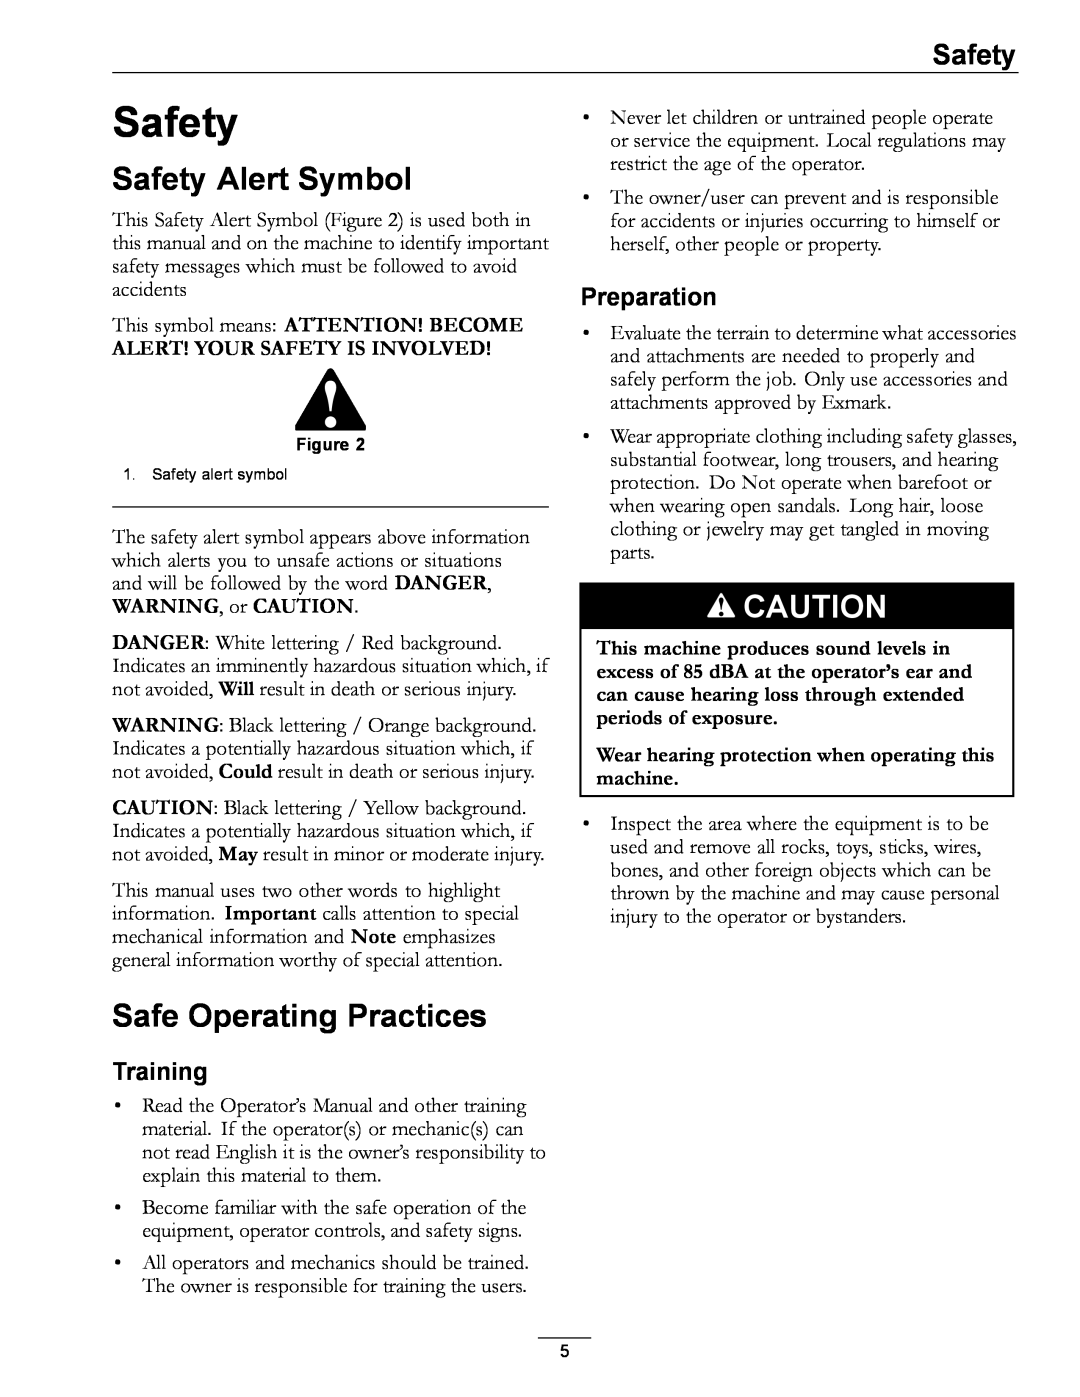 Exmark 4500-507 Safety Alert Symbol, Safe Operating Practices, Training, Preparation, Alert! Your Safety Is Involved 